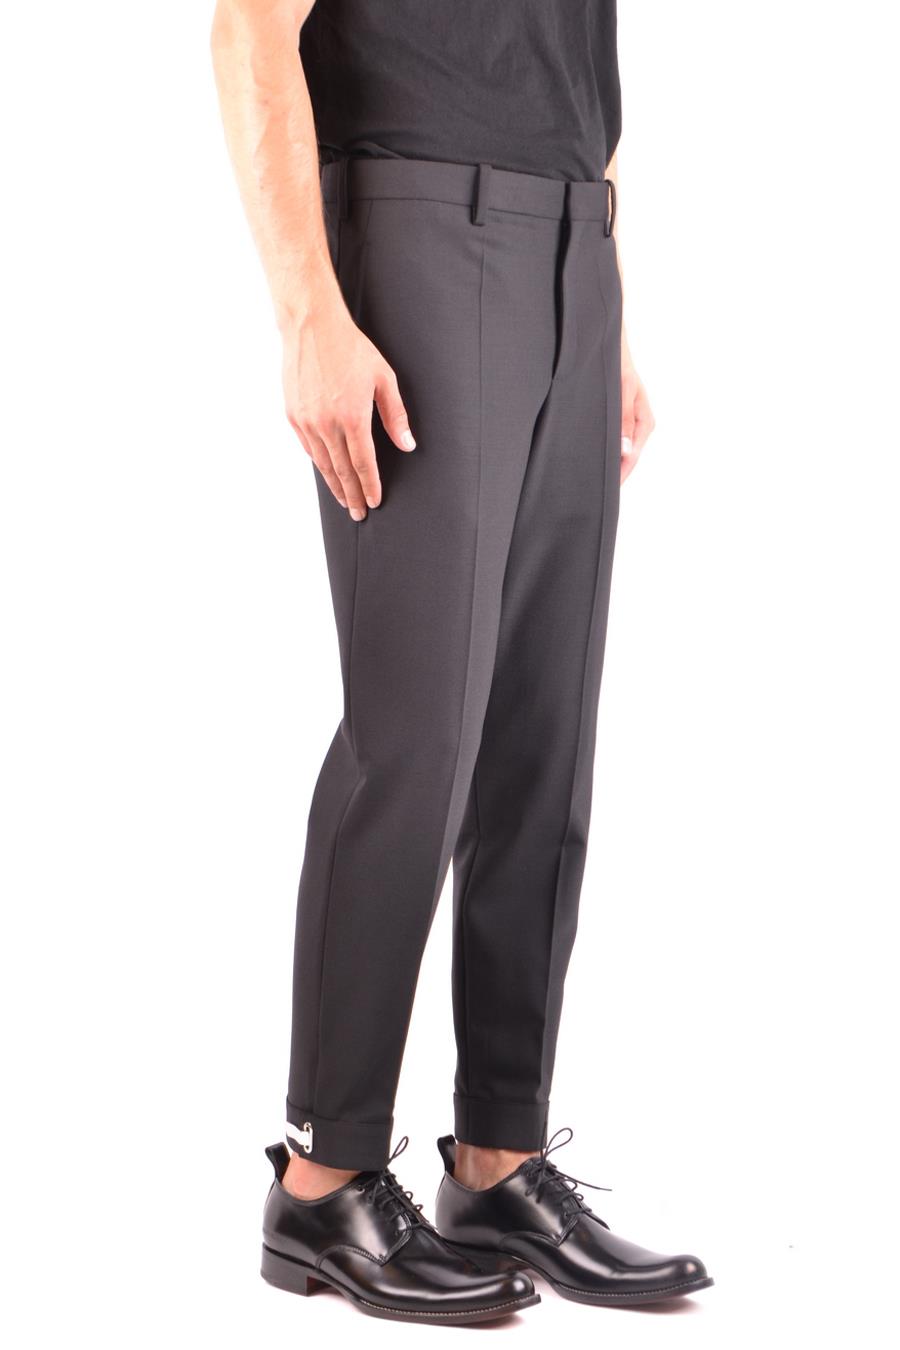 NEIL BARRETT Trousers | ViganoBoutique.com